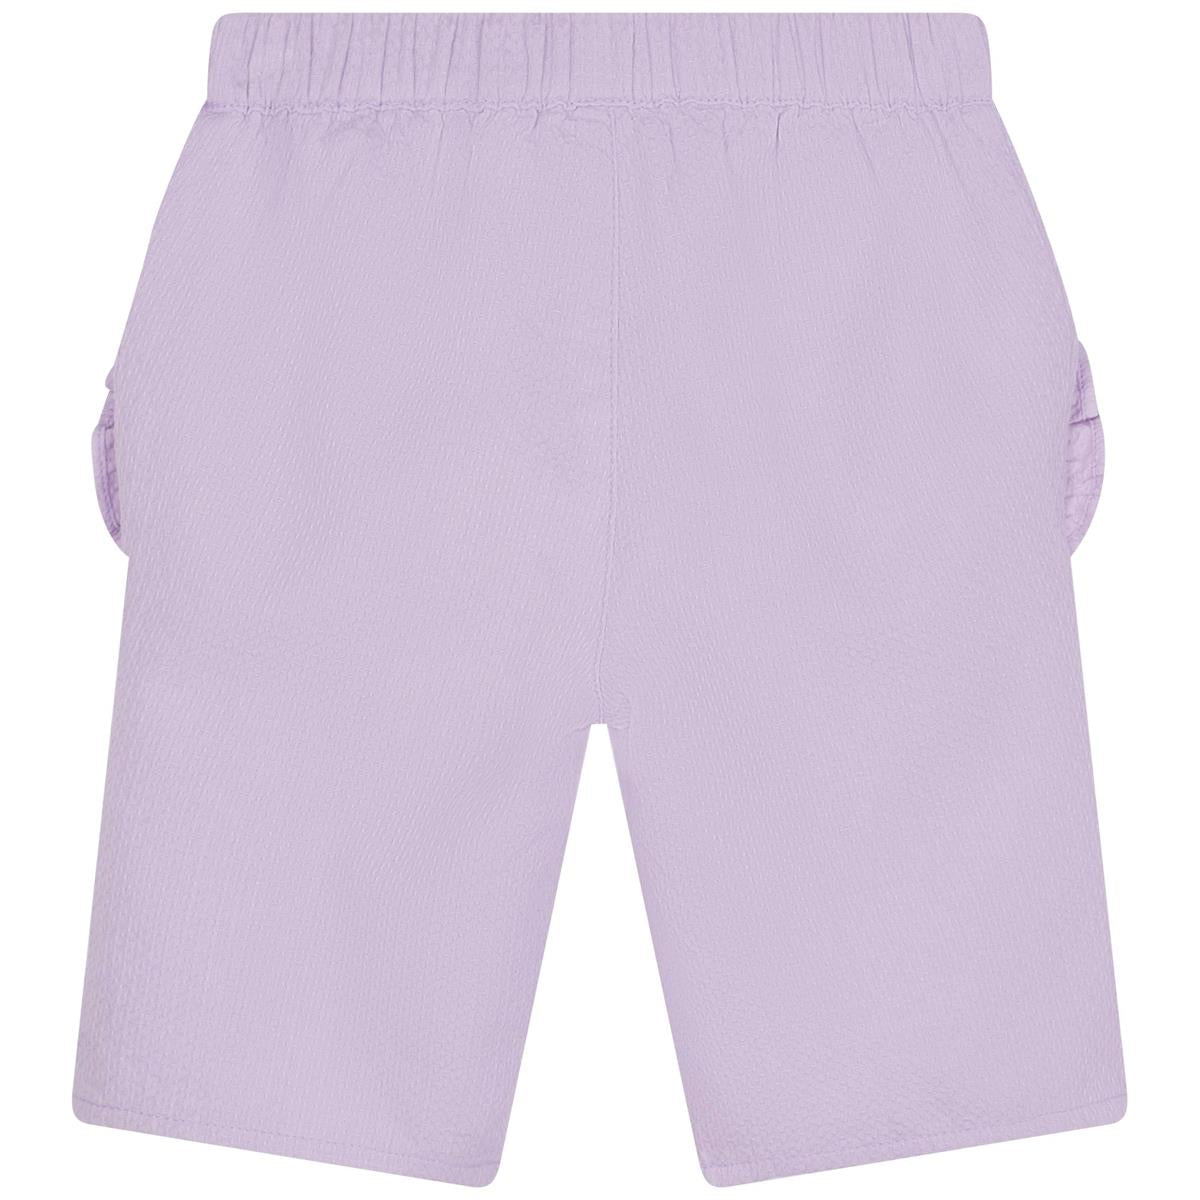 Girls Purple Shorts